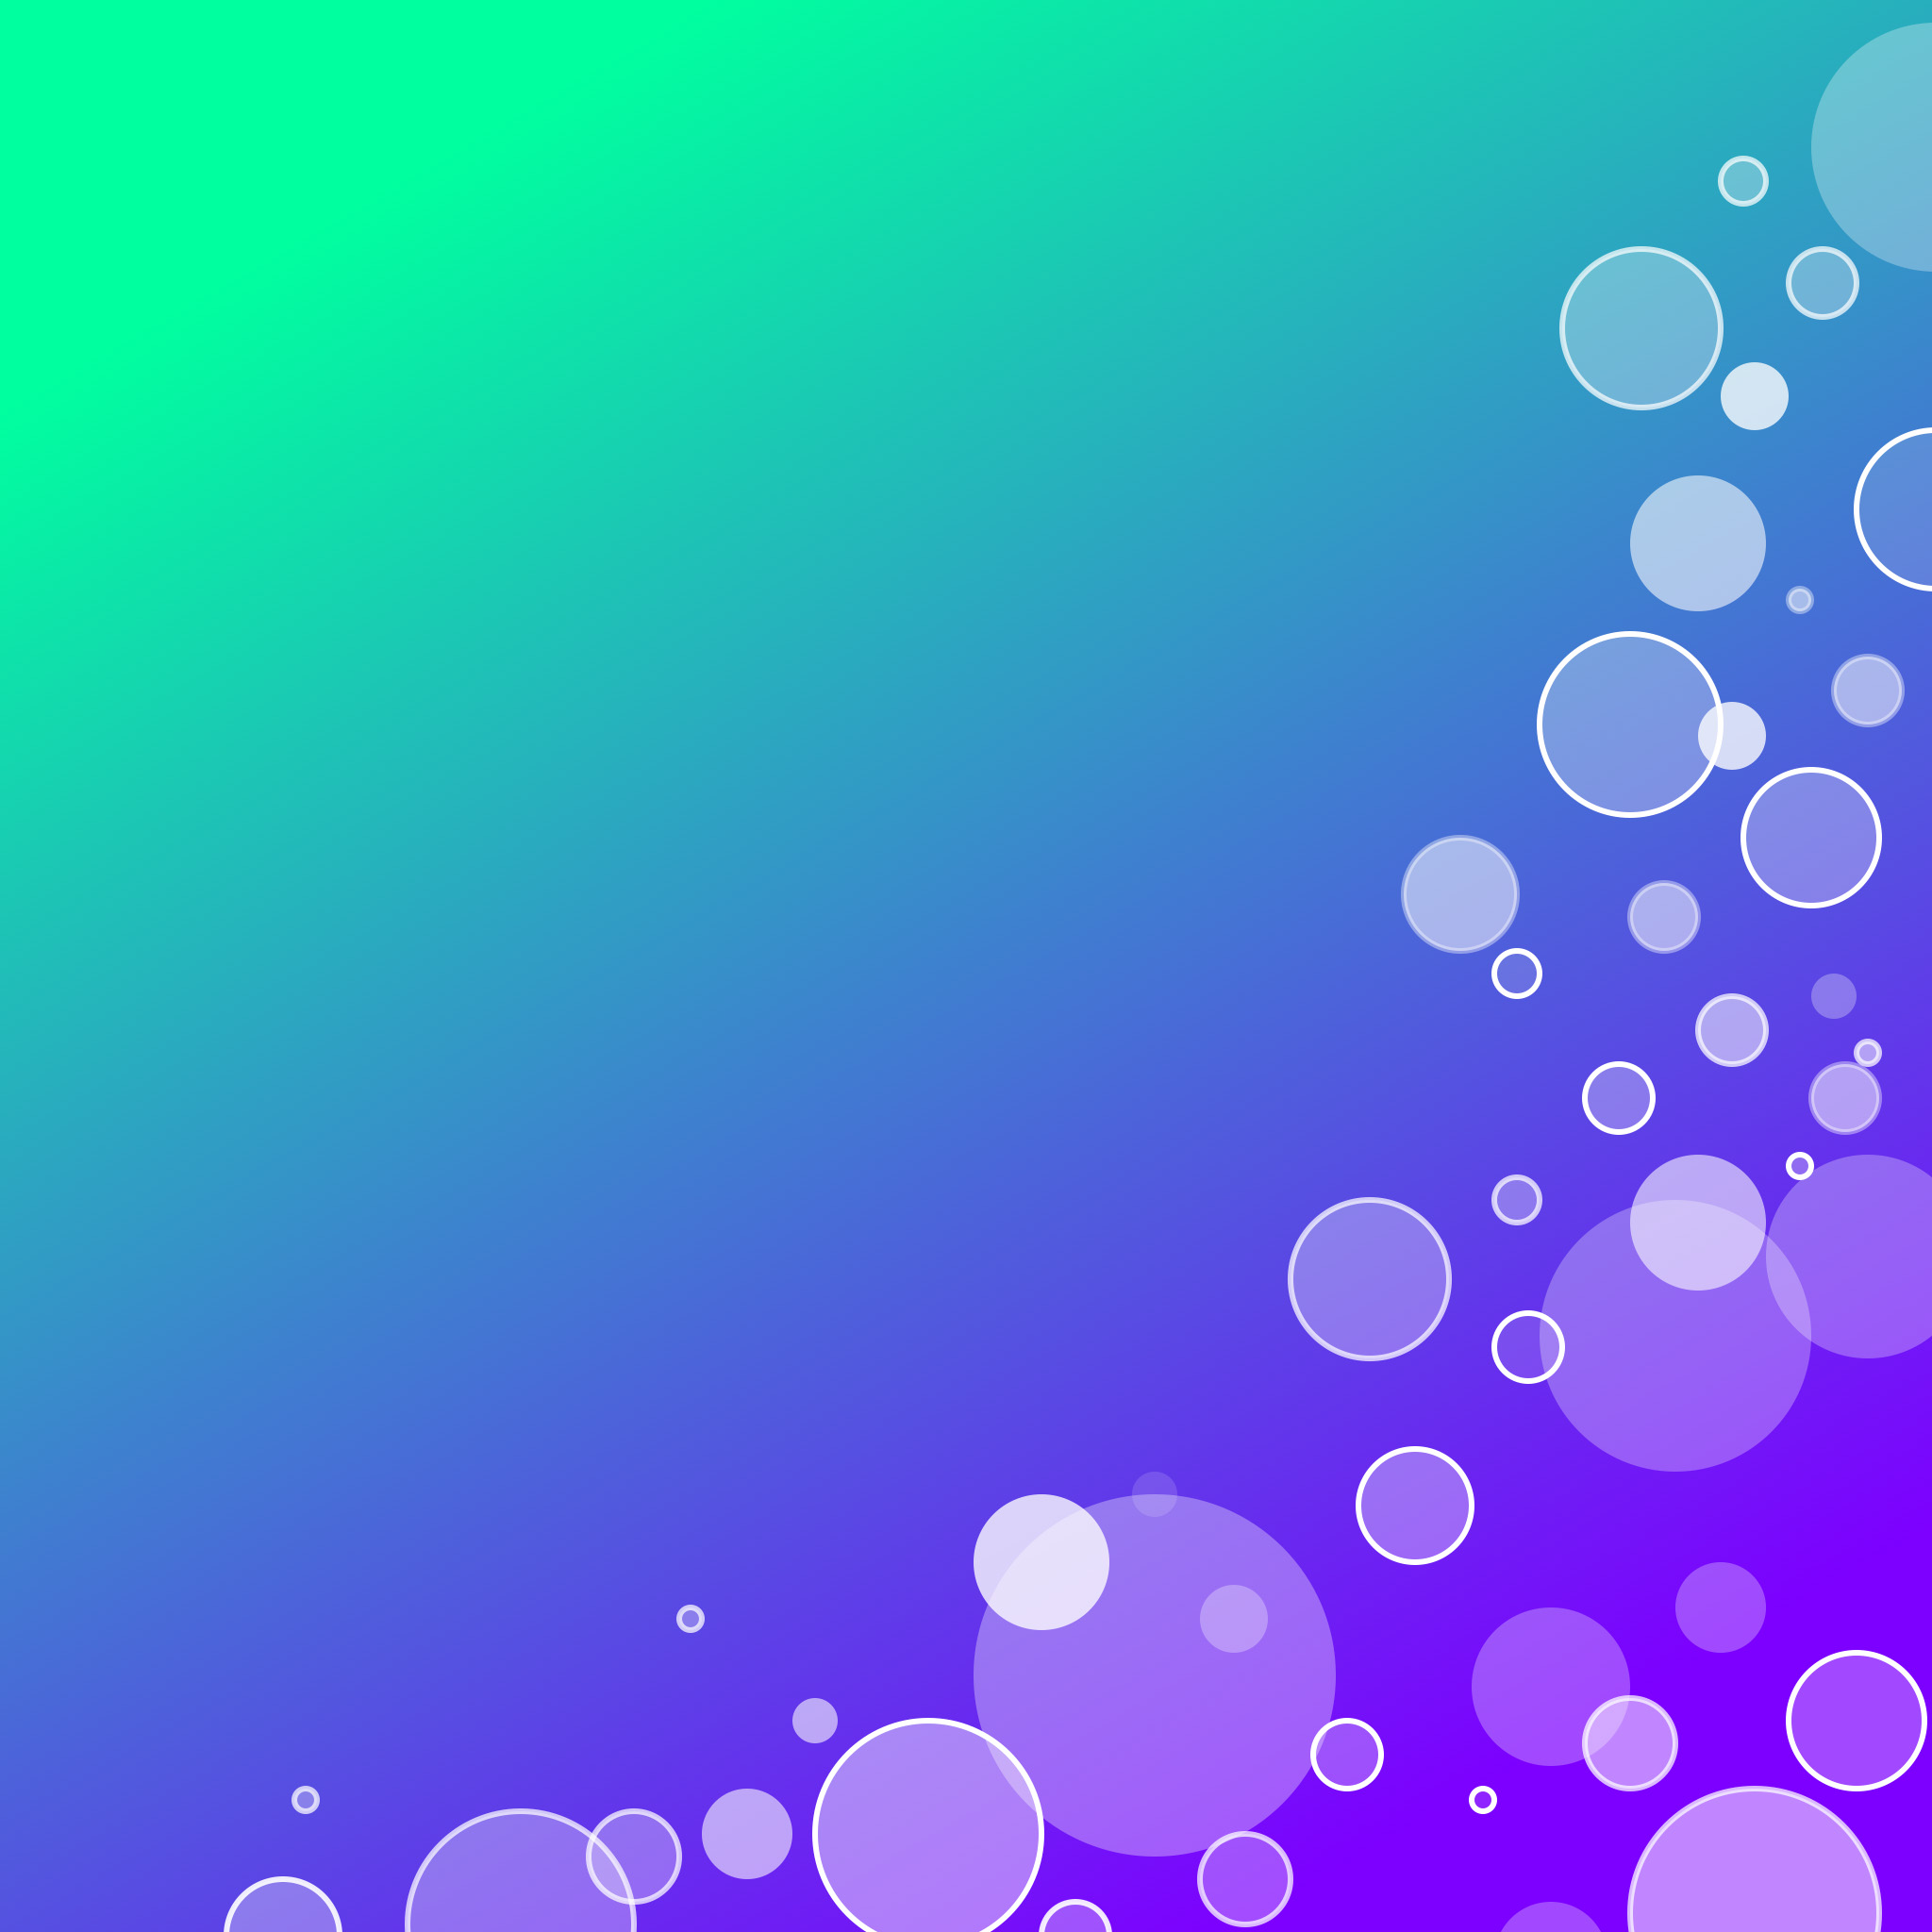 ipad fondo de pantalla de bloqueo,azul,púrpura,violeta,agua,turquesa